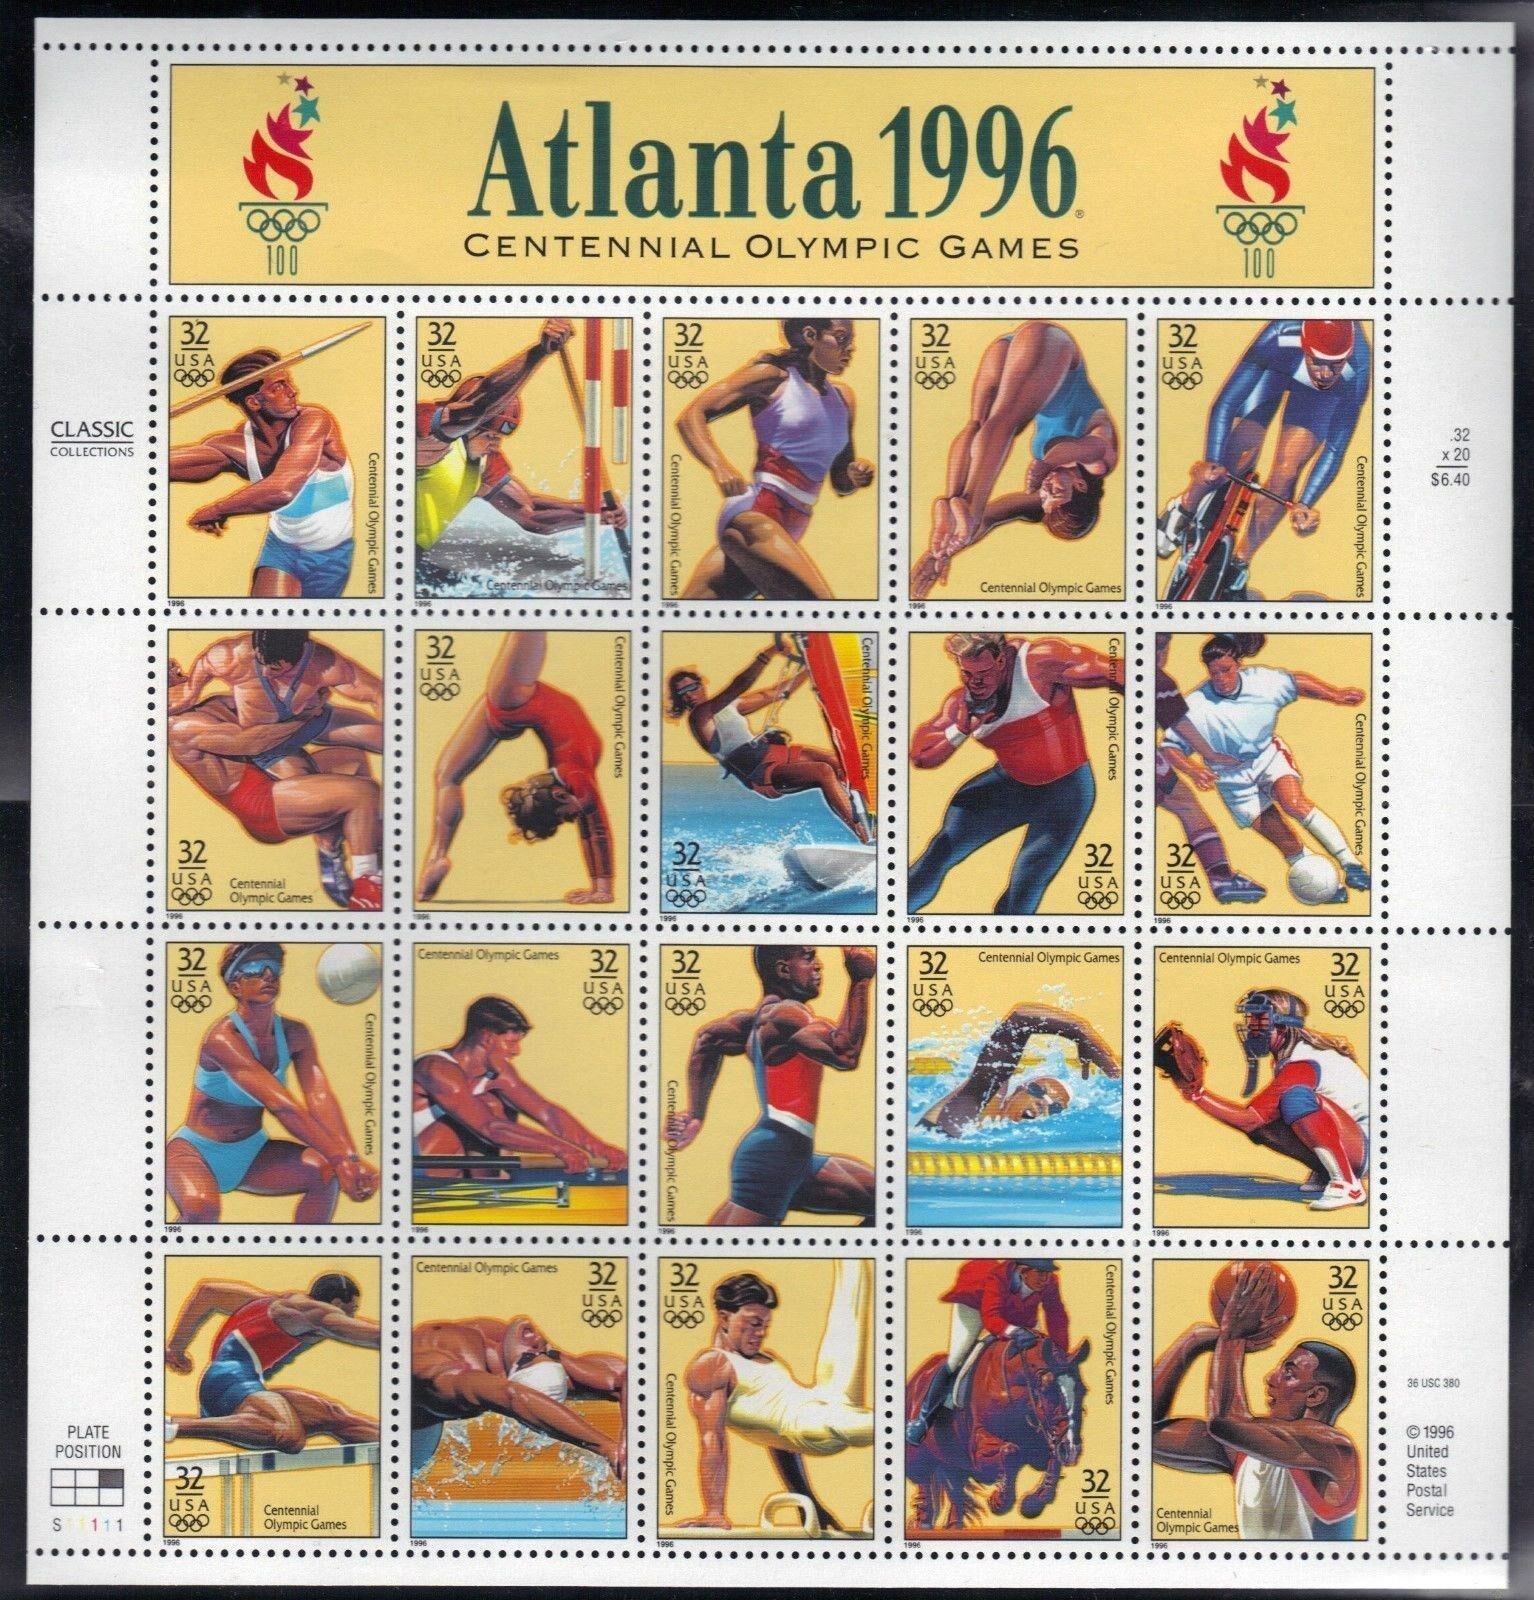 Primary image for 1996 Atlanta Summer Olympics Games Sheet of Twenty 32 Cent Stamps Scott 3068